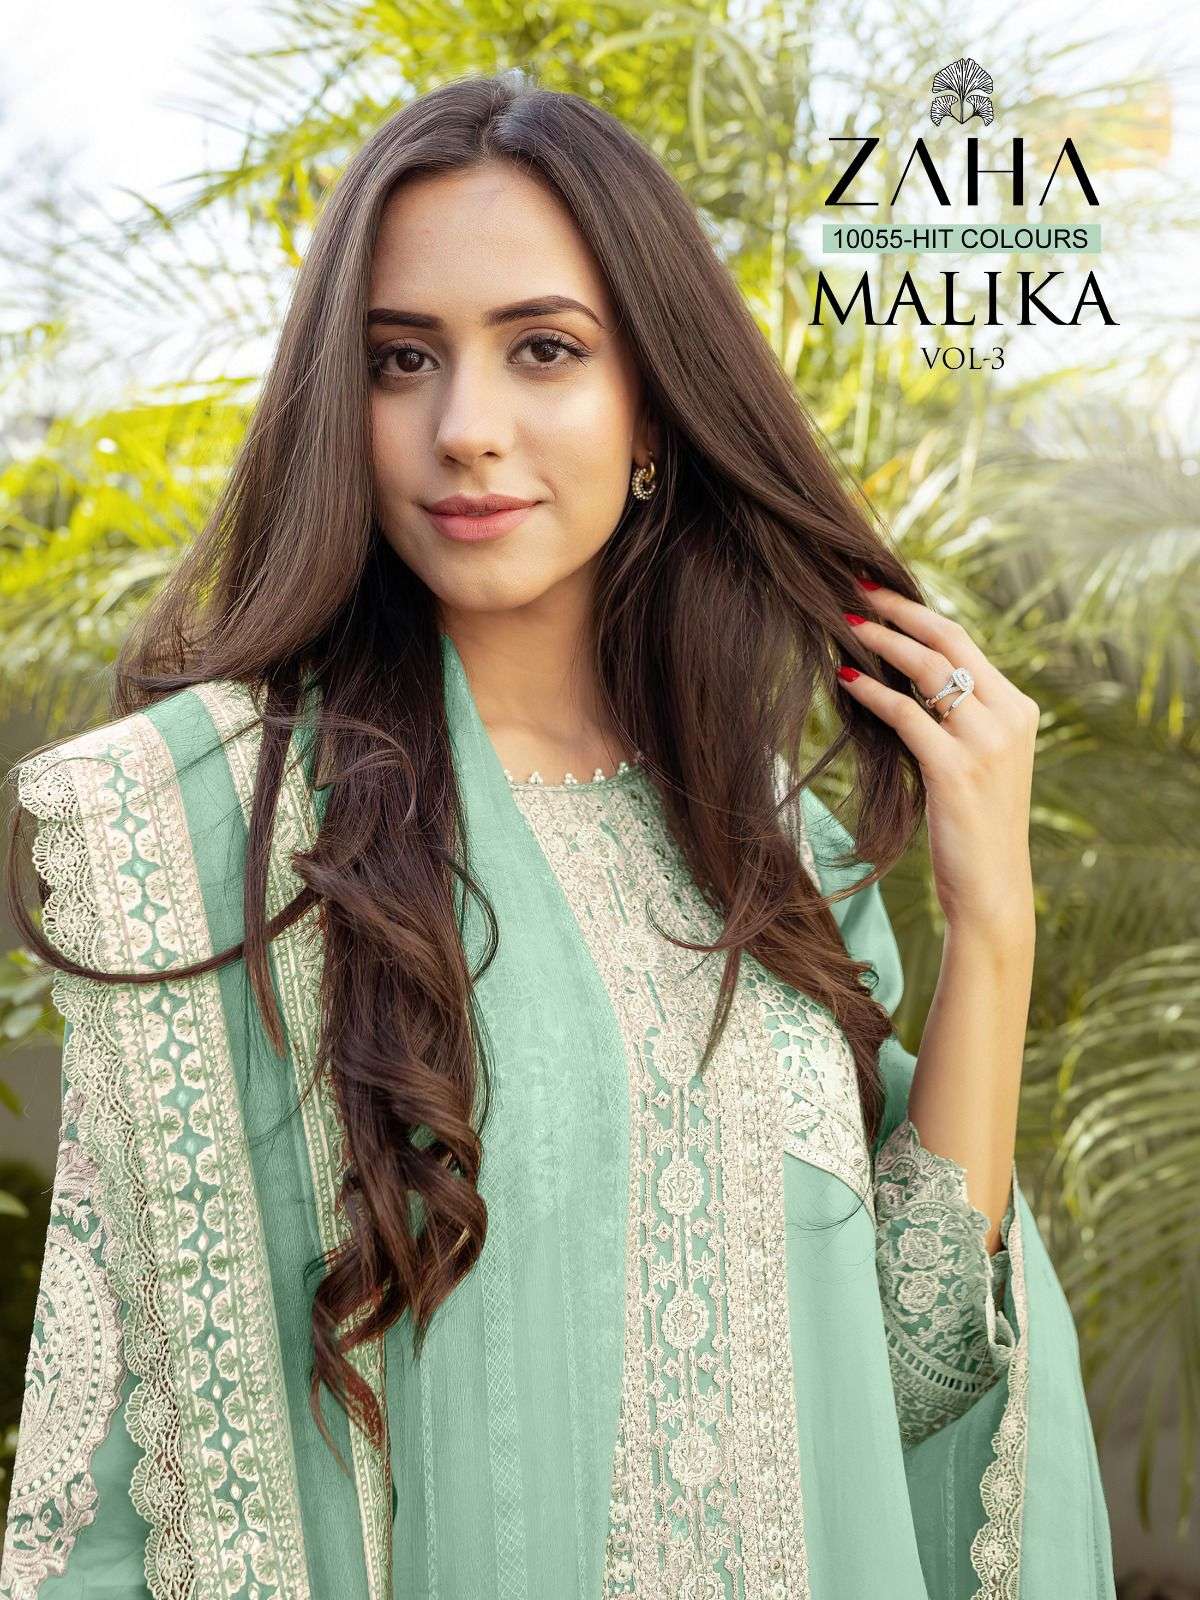 zaha malika vol 3 10055 design colors pakistani dresses 